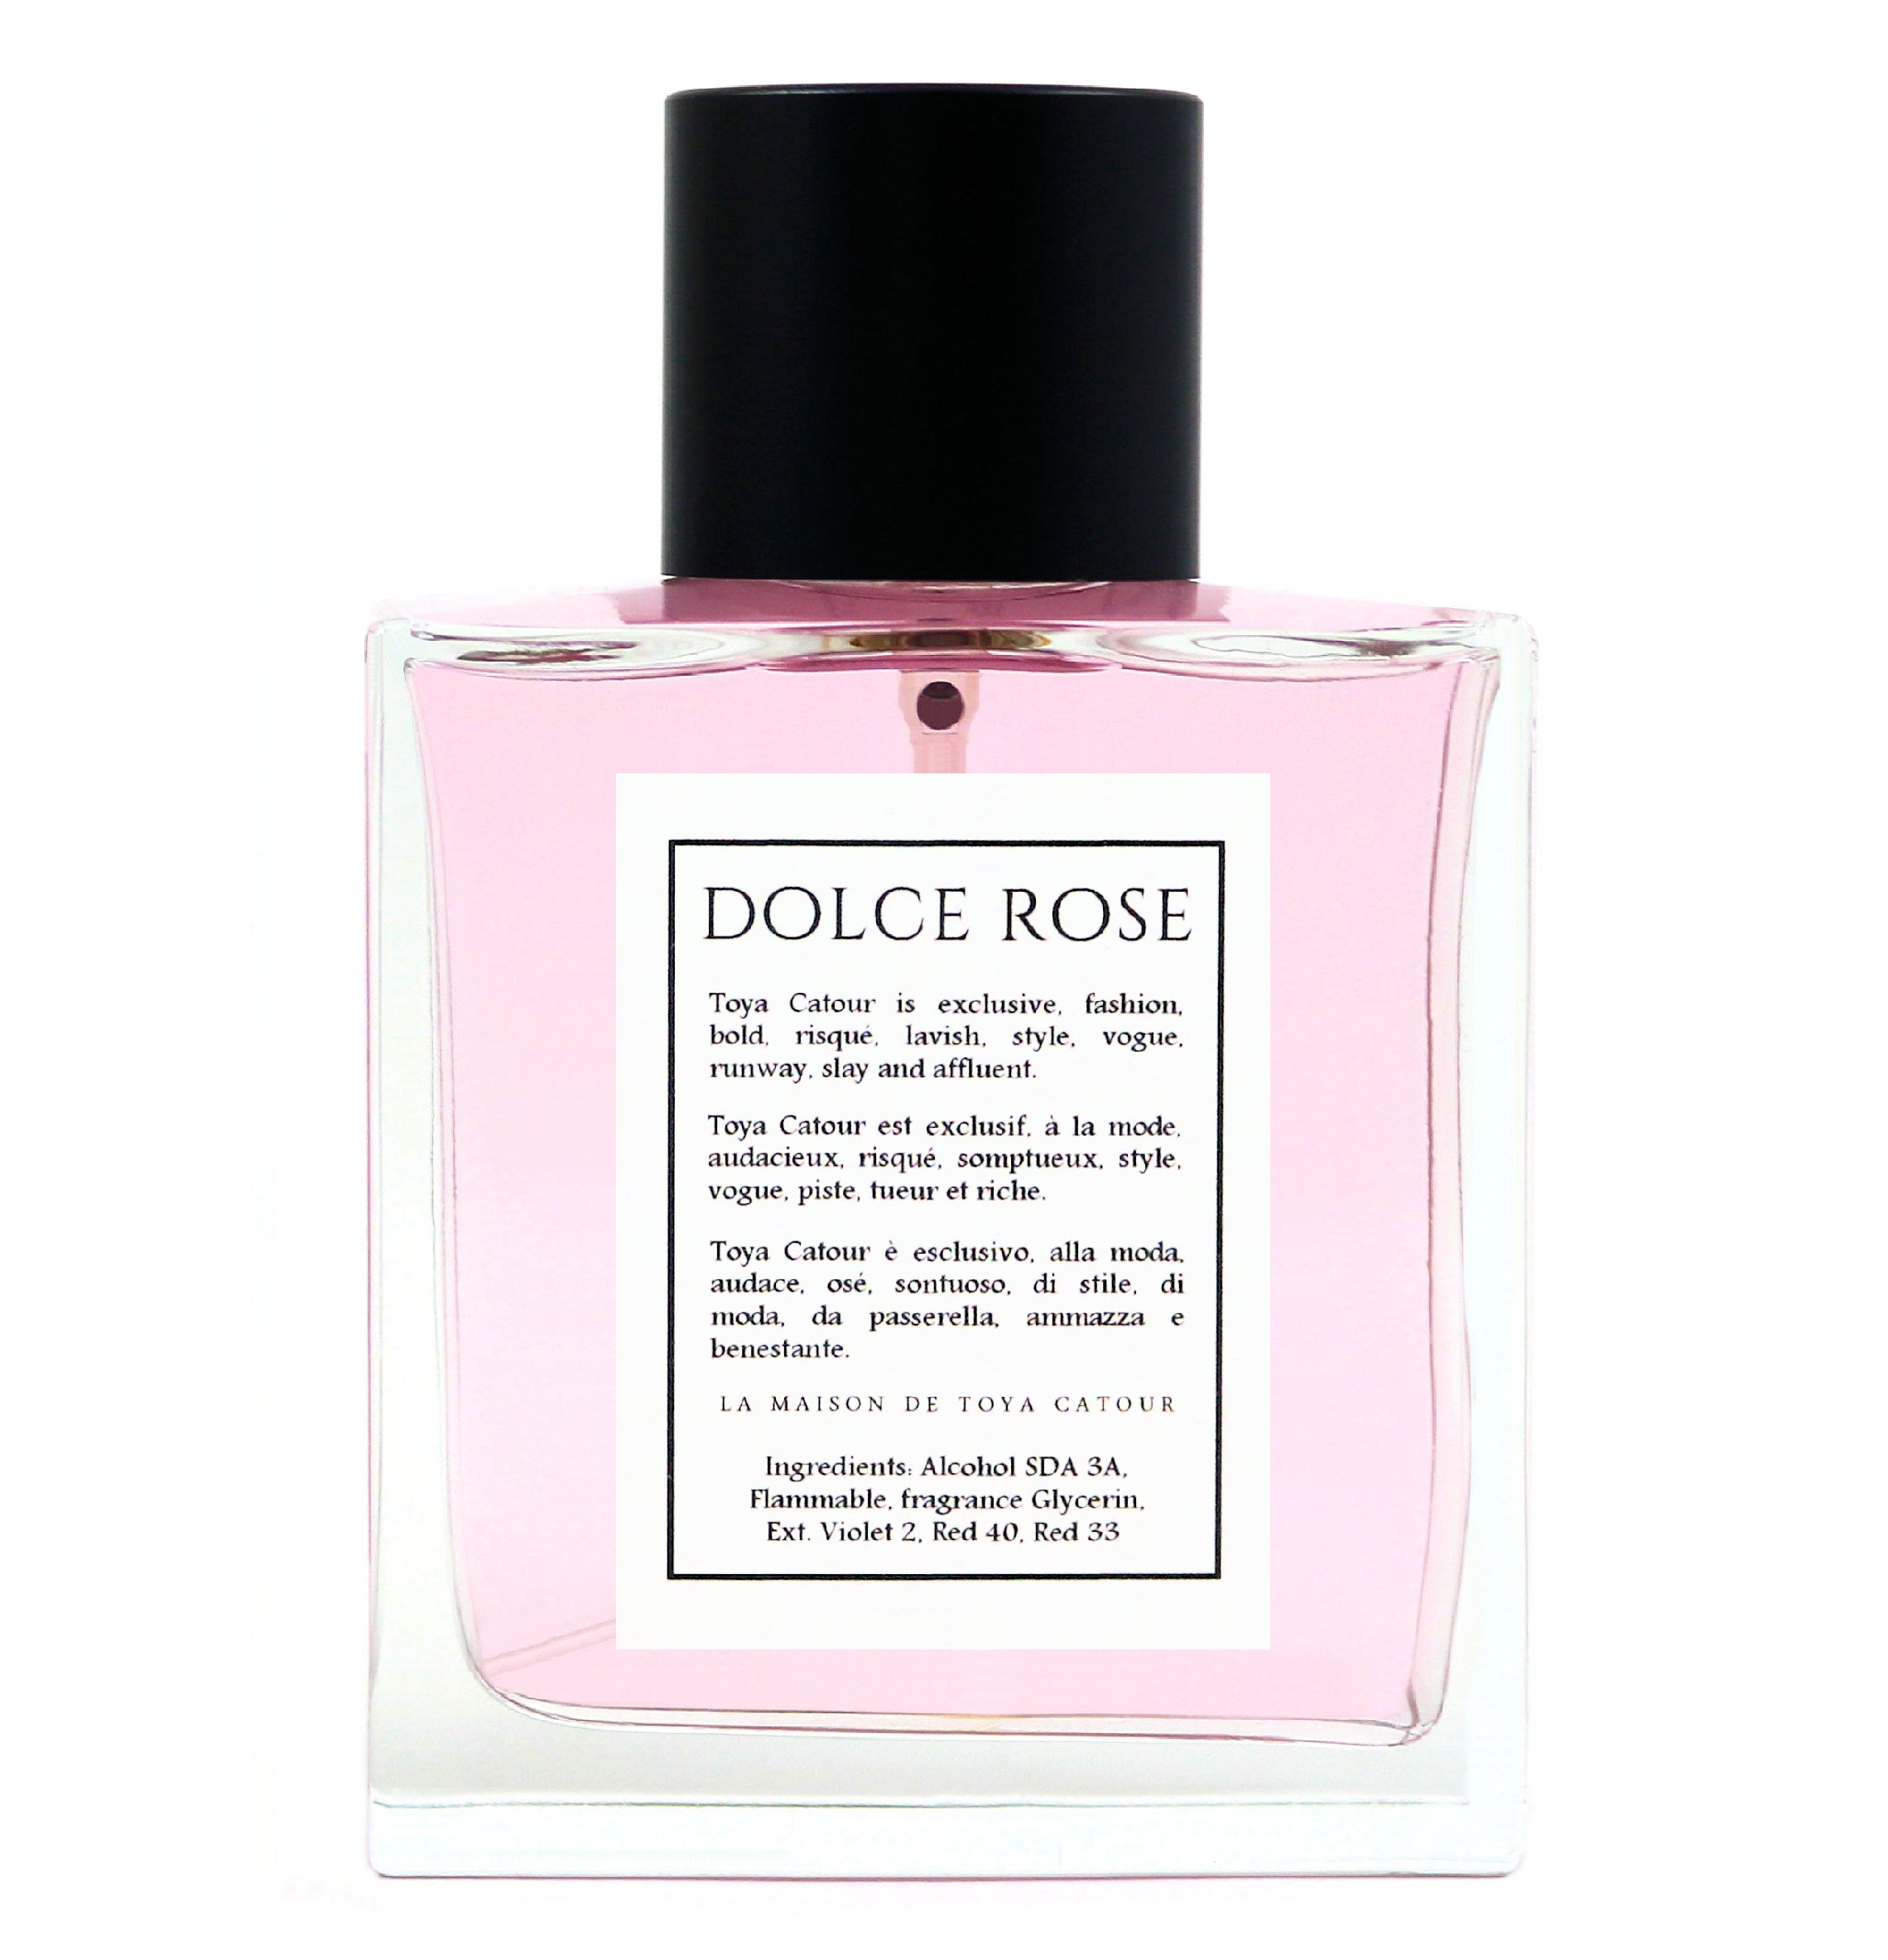 Dolce Rose Luxury Fragrance – Toya Catour